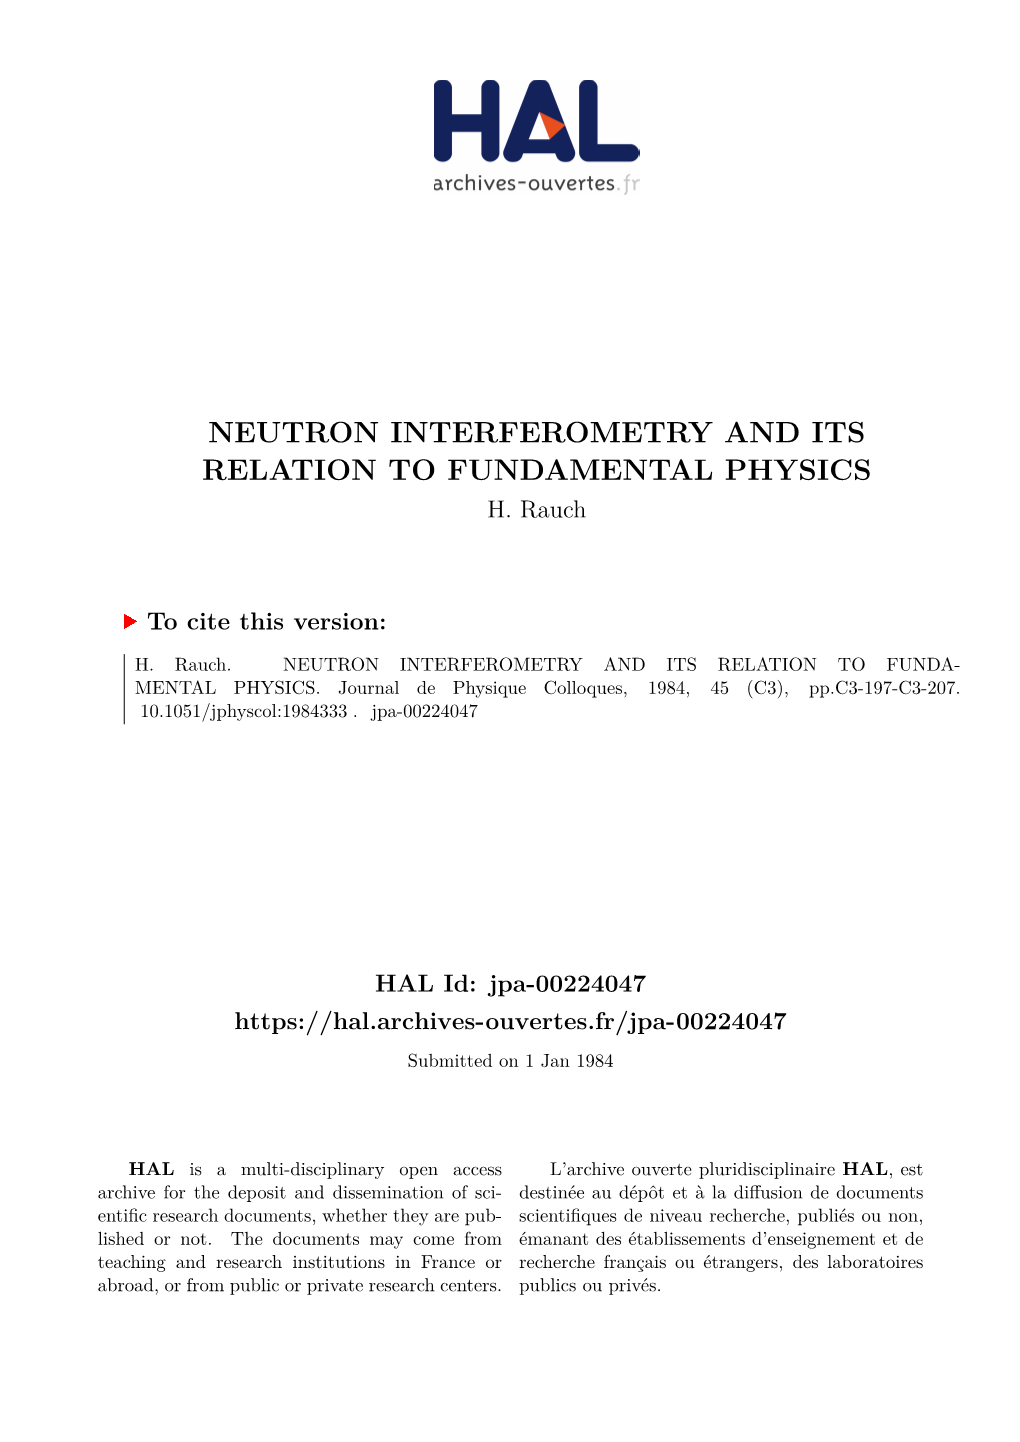 Neutron Interferometry and Its Relation to Fundamental Physics H